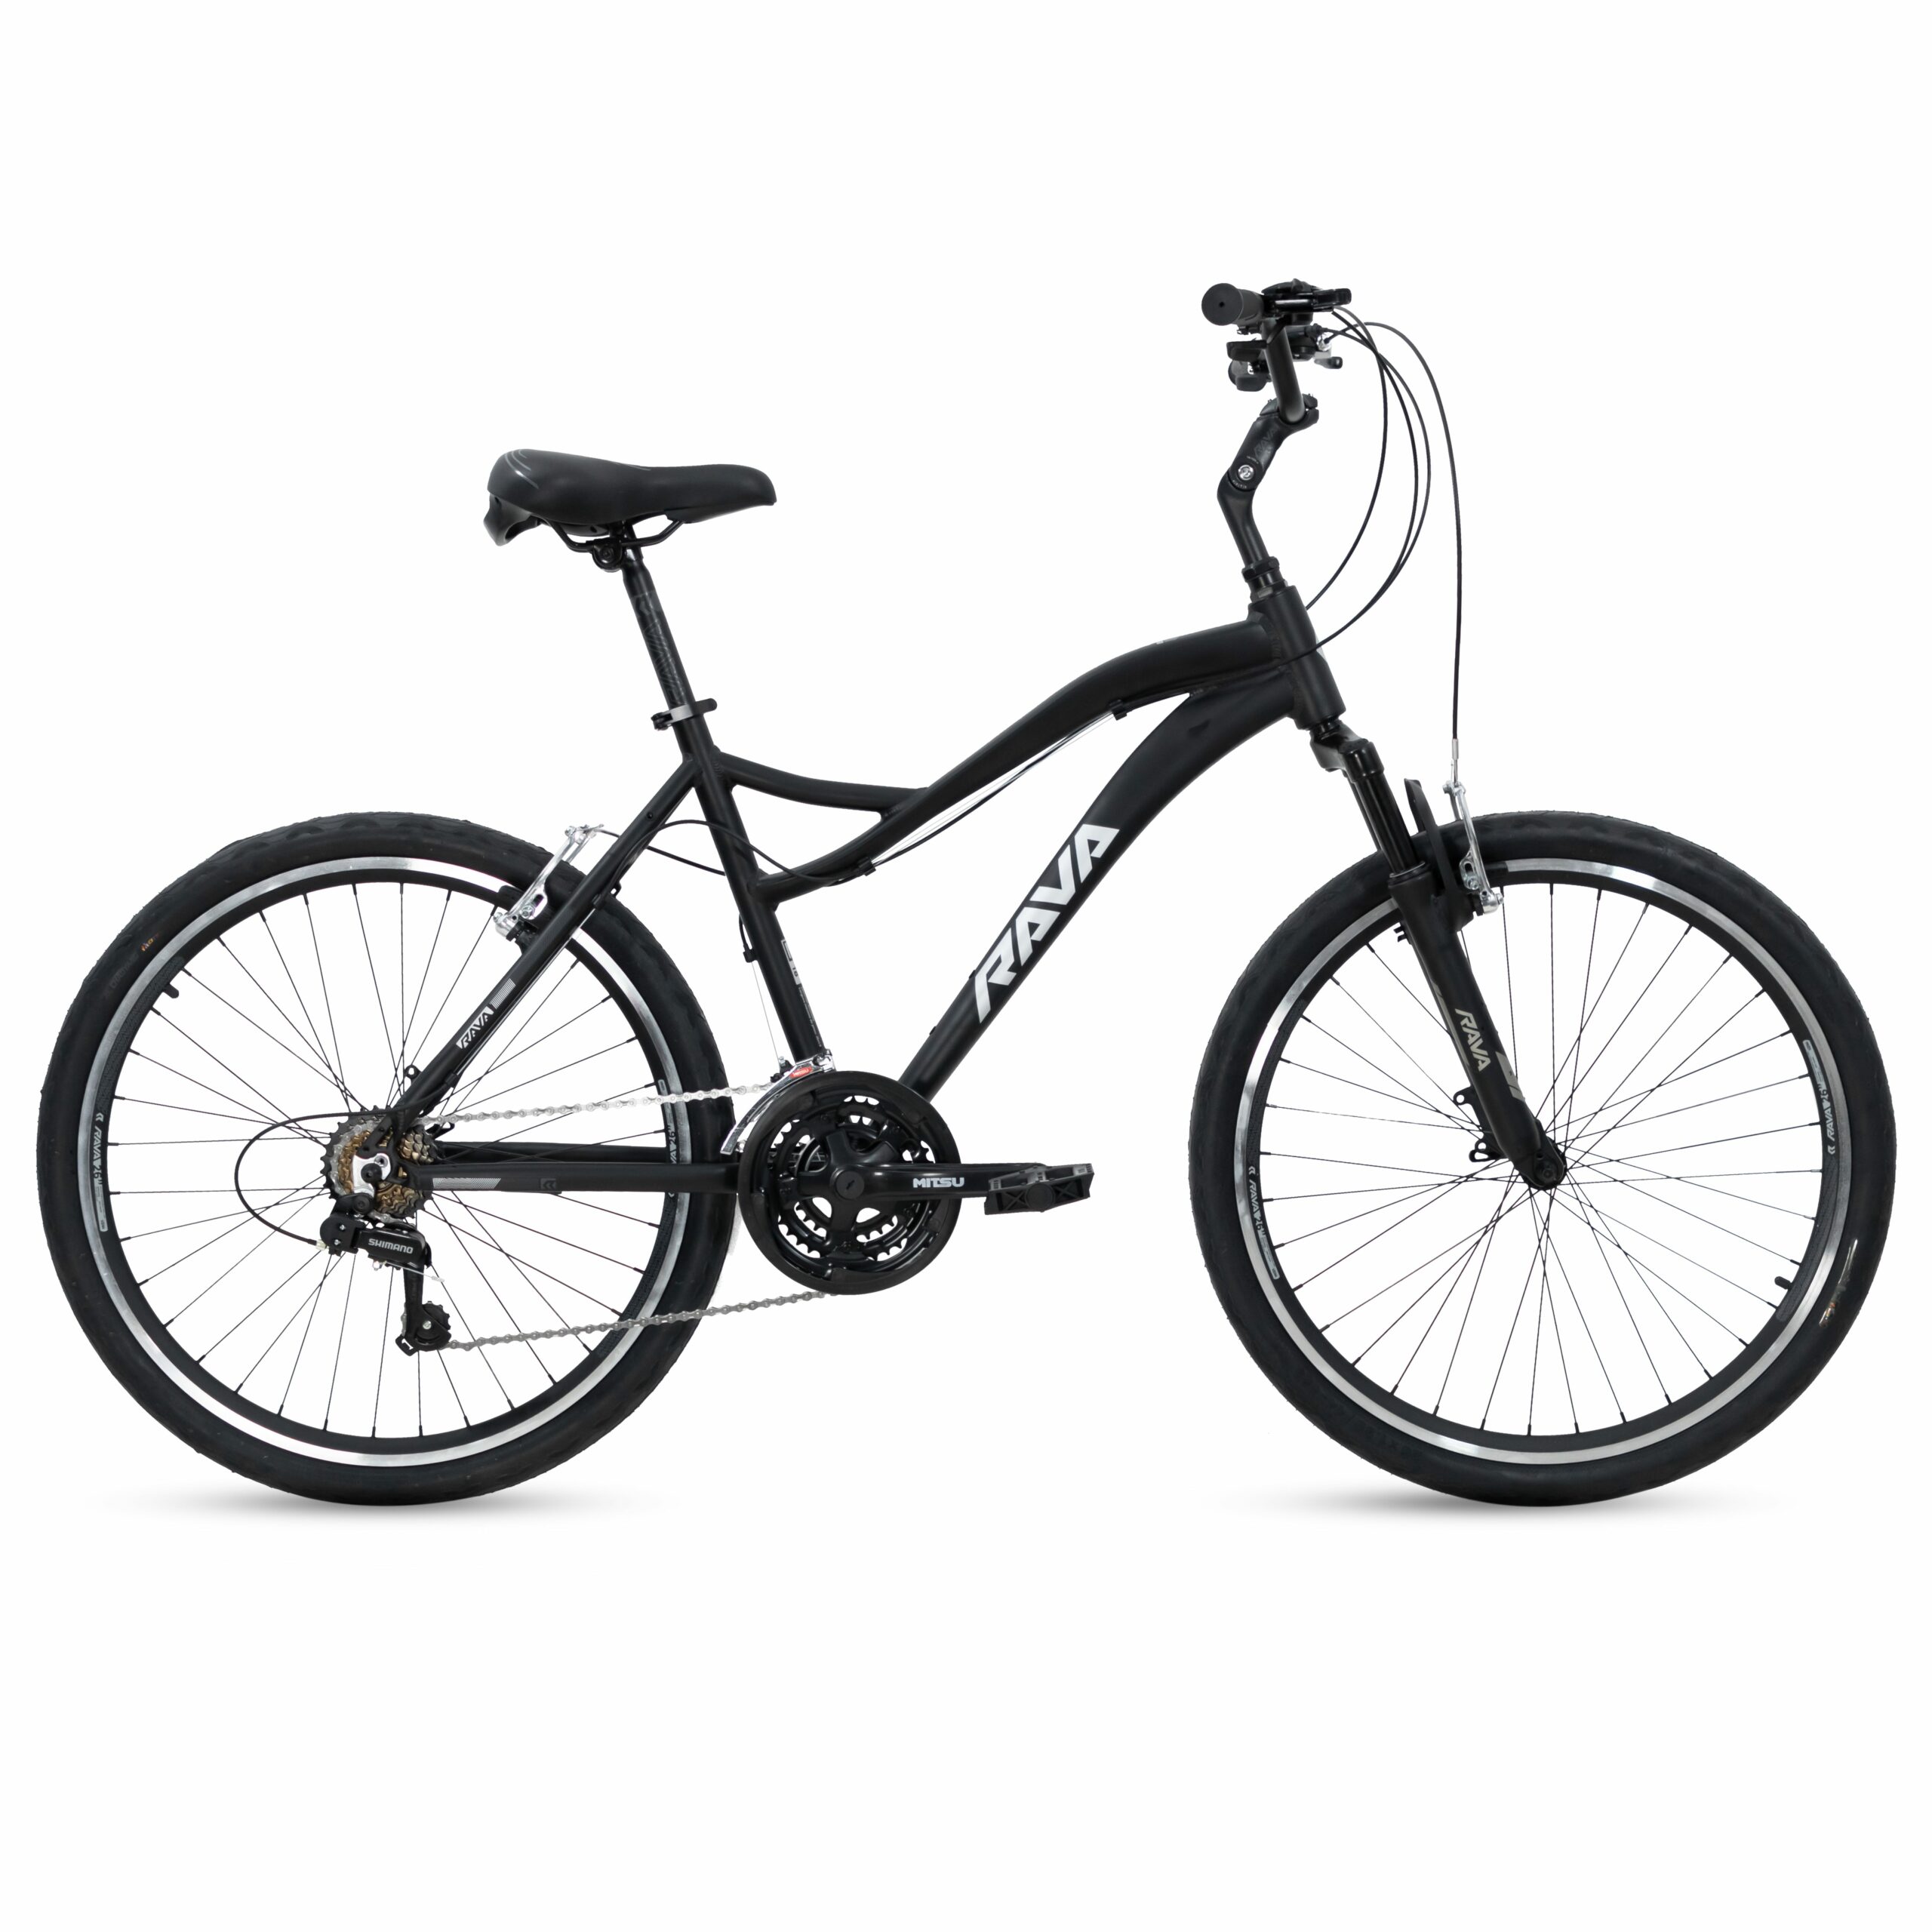 Bicicleta Rava Bolt 21 velocidades | 2020 - Preto/Cinza